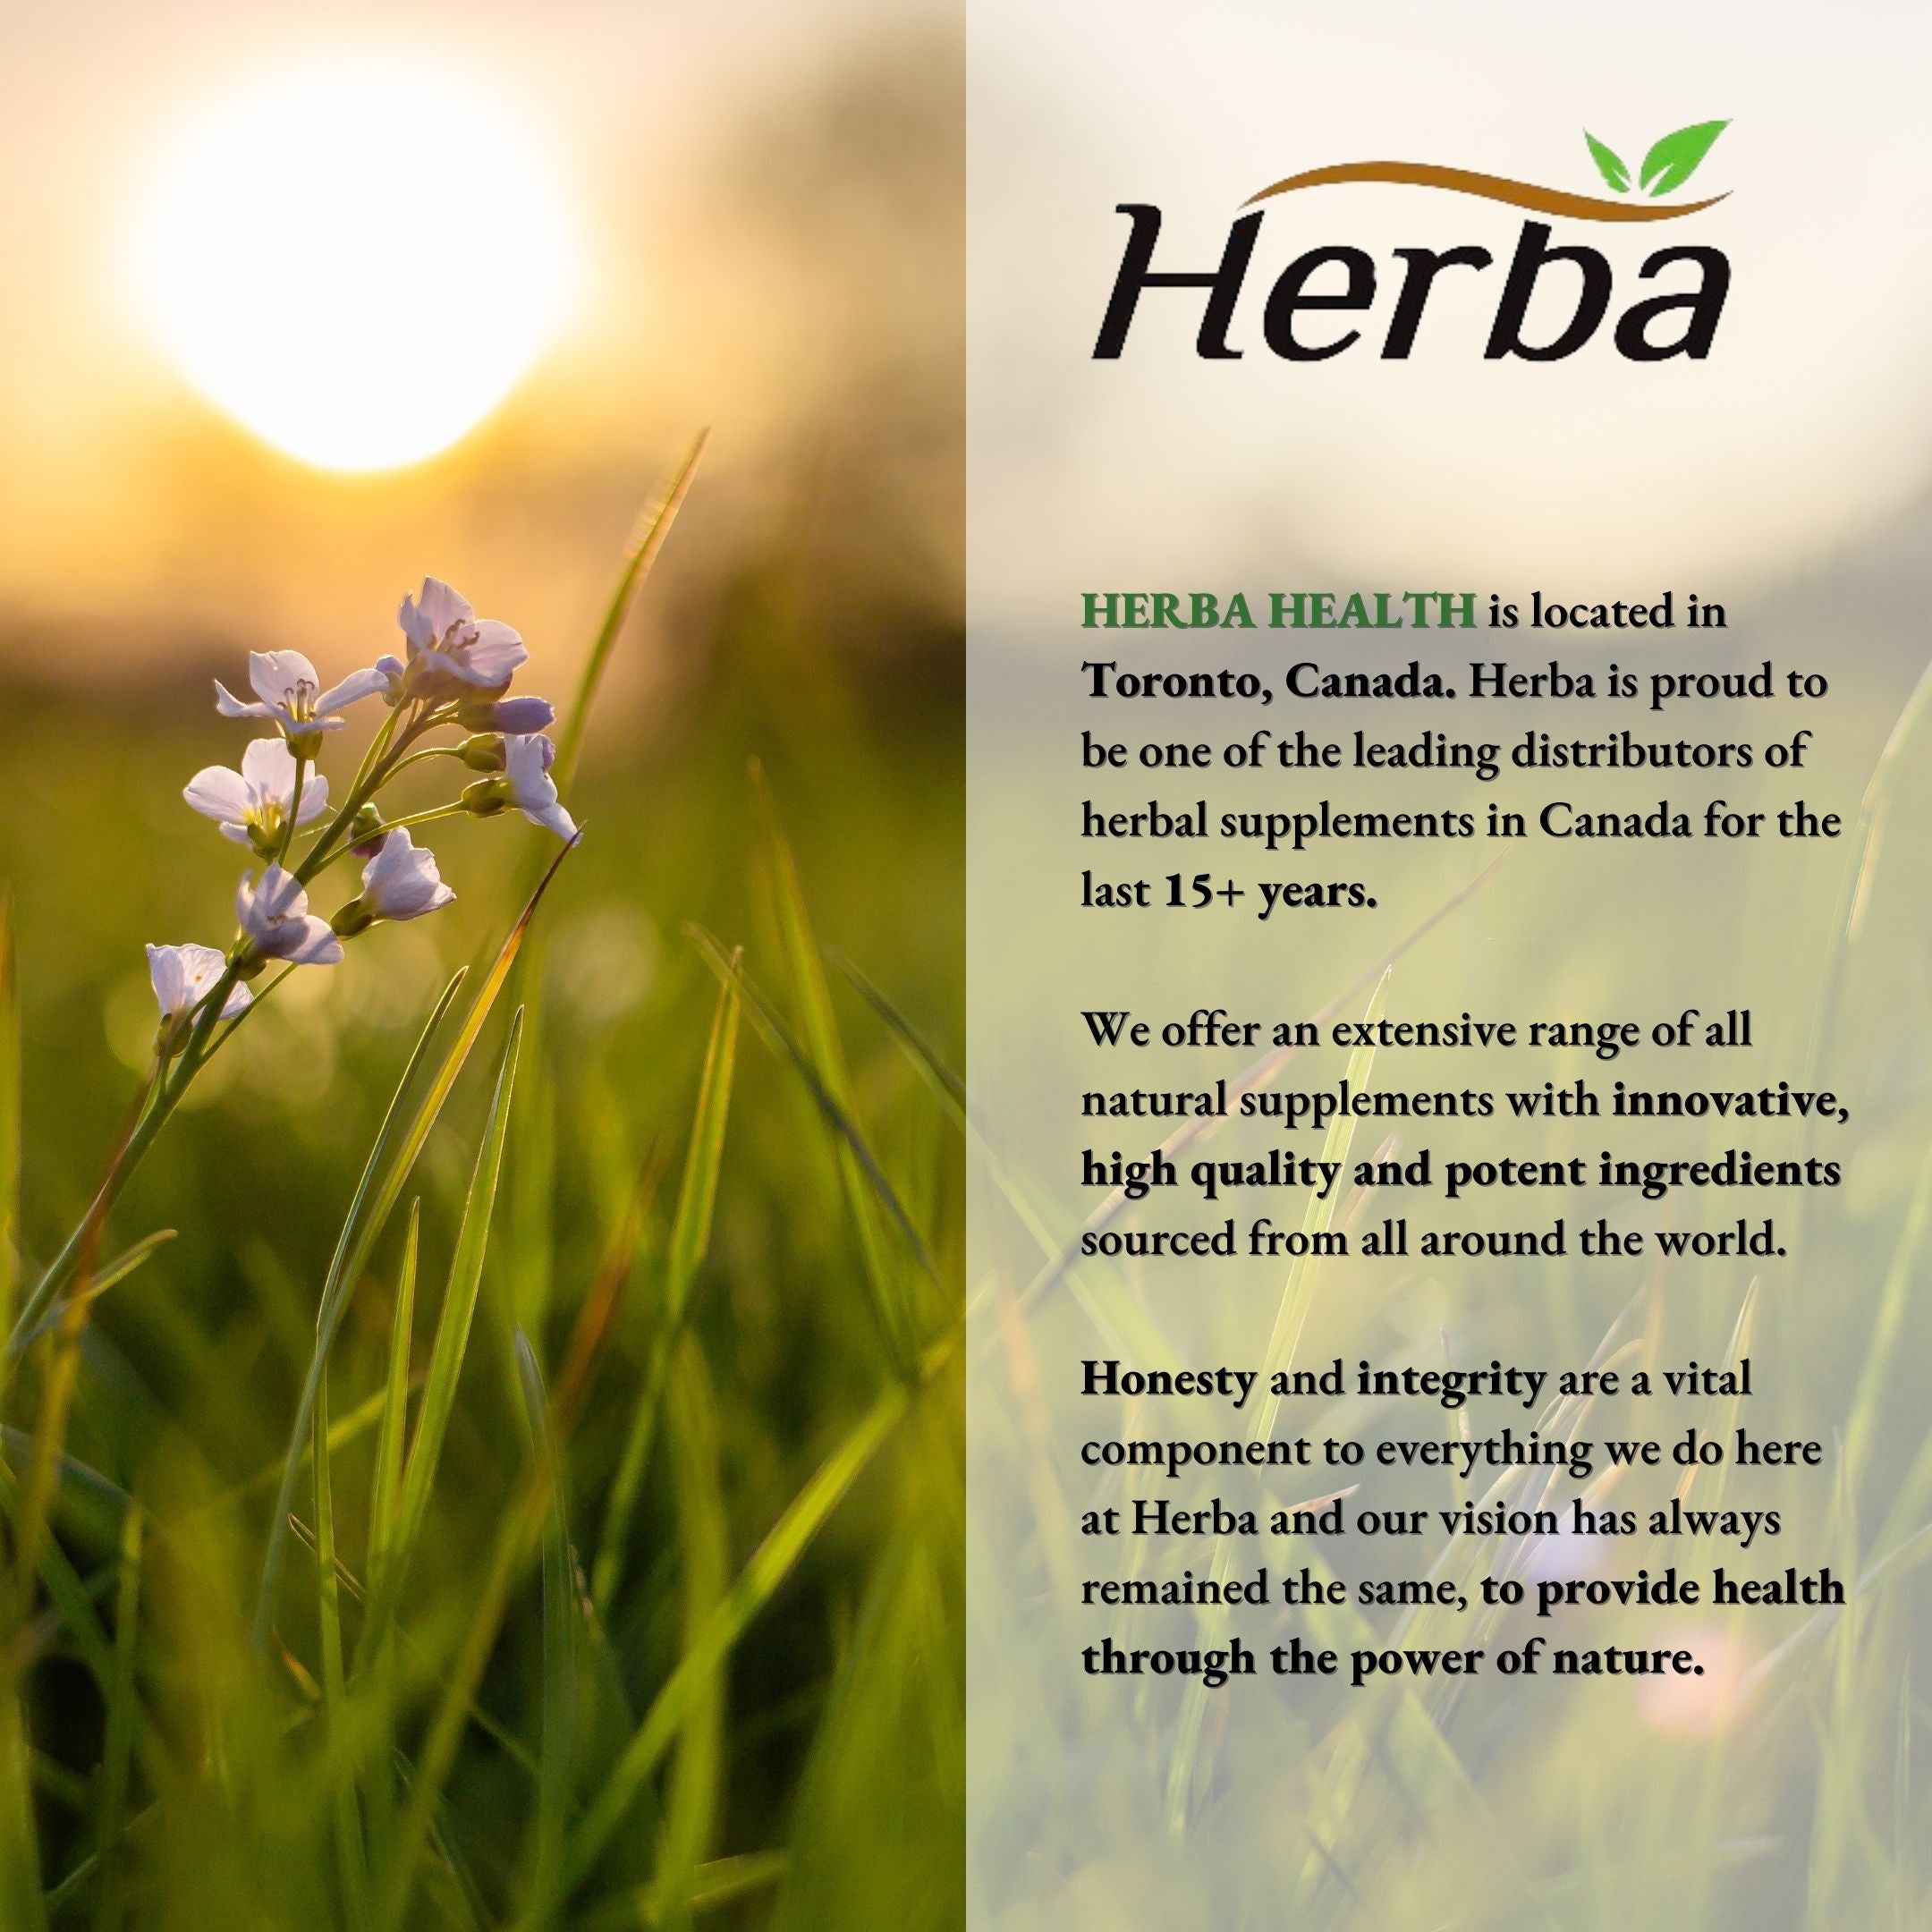 Herba Marine Collagen Powder with Hyaluronic Acid, Silica, and Vitamin C – 304.8g